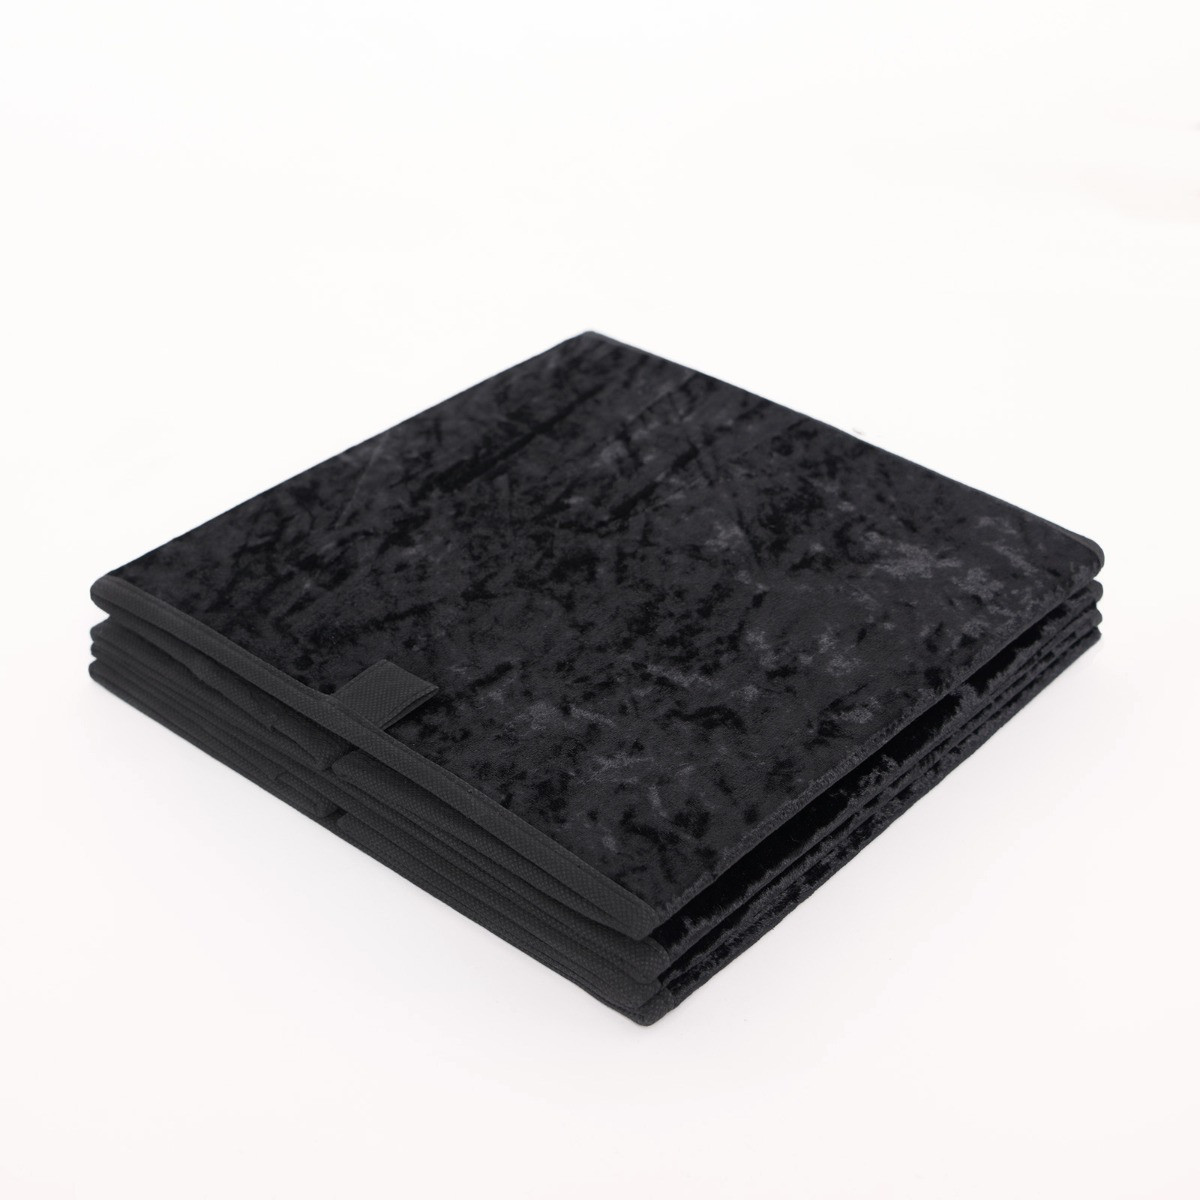 OHS Crushed Velvet Cube Storage Boxes, Black - 2 Pack>